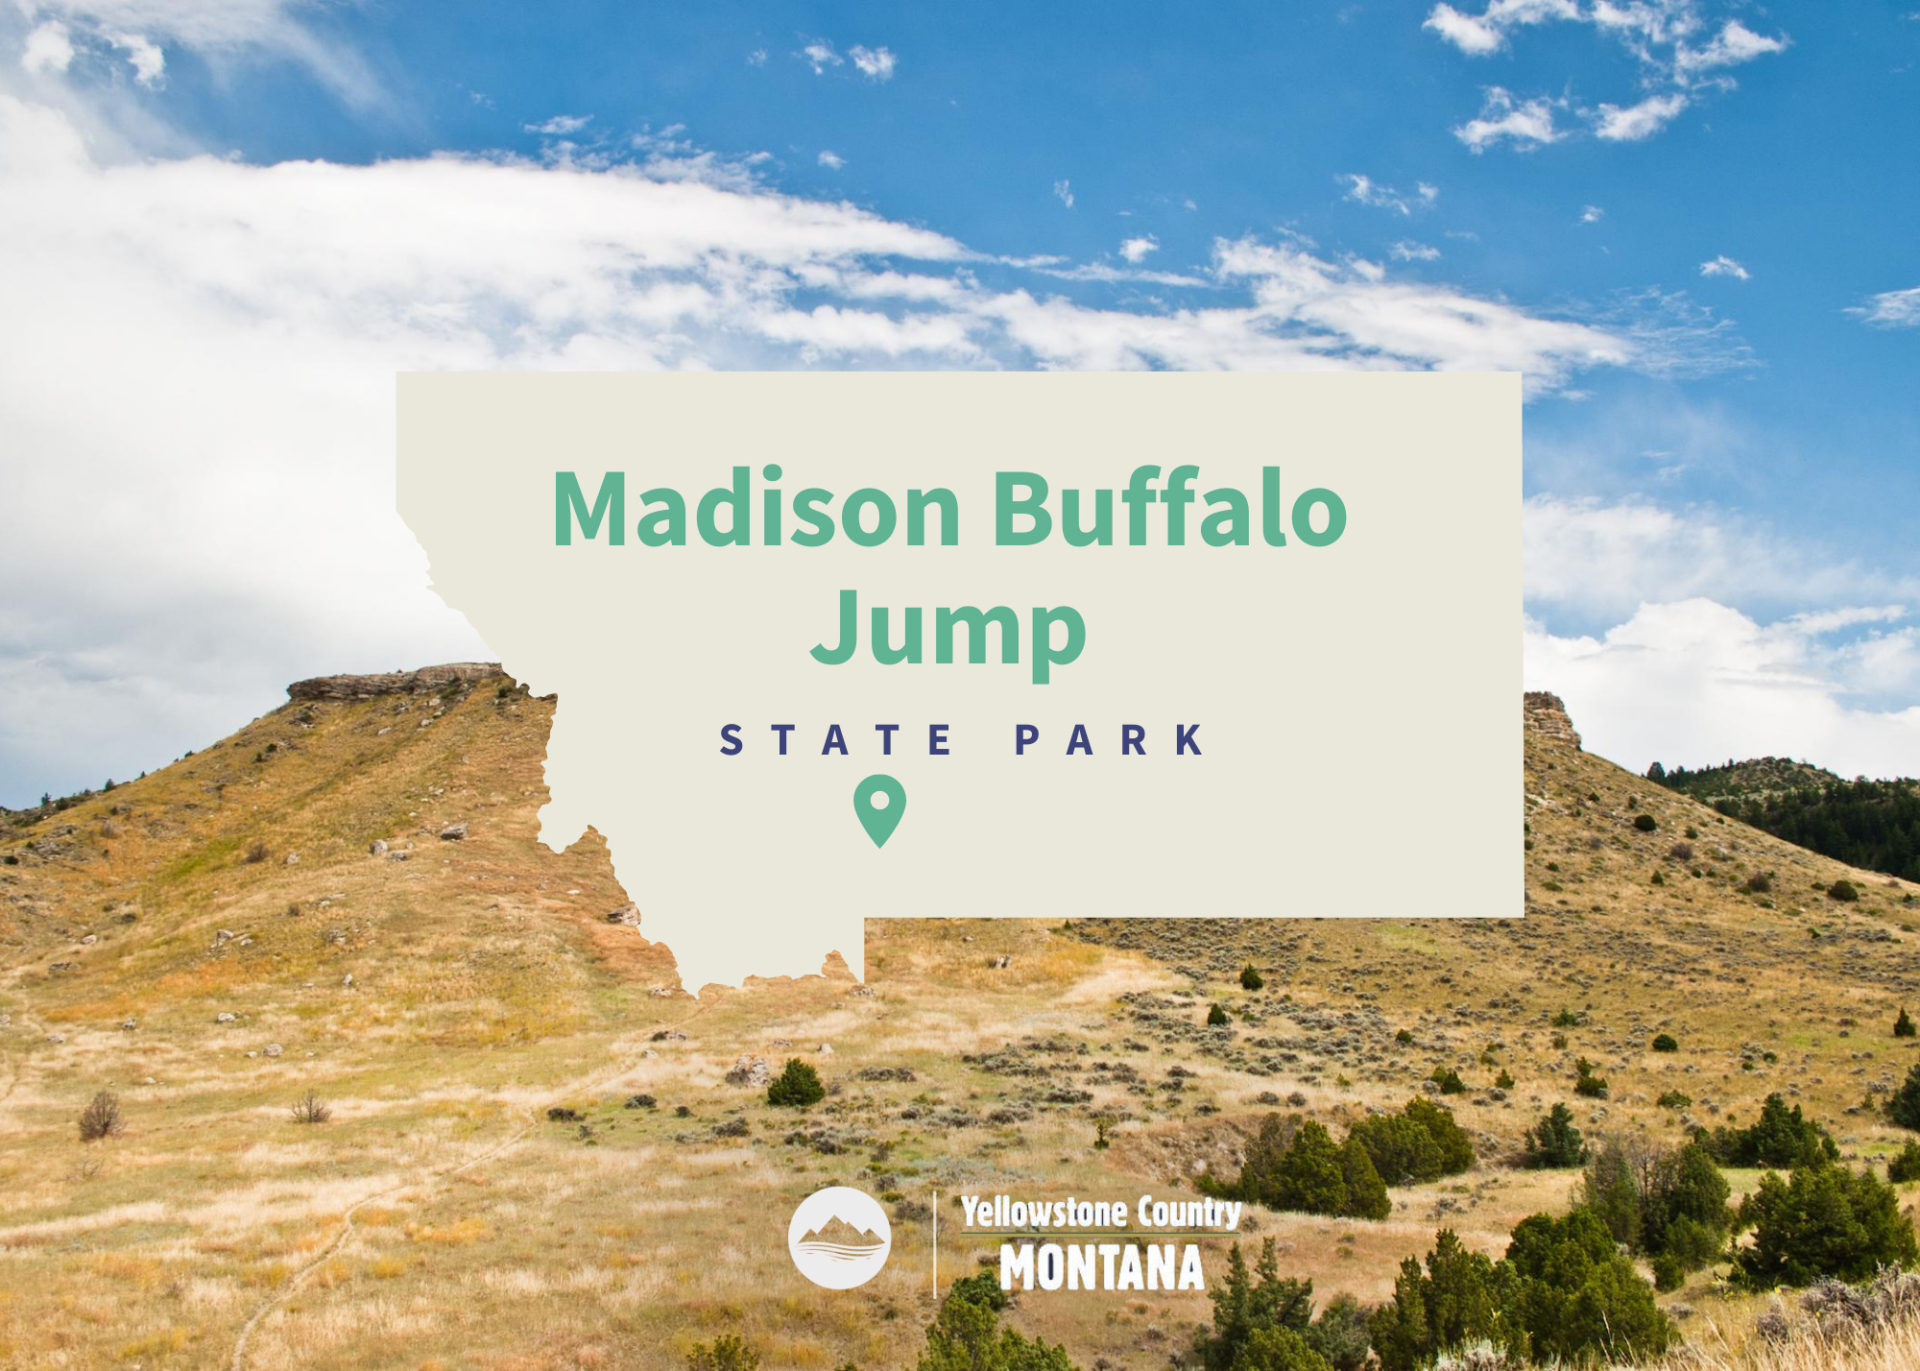 Madison Buffalo Jump State Park